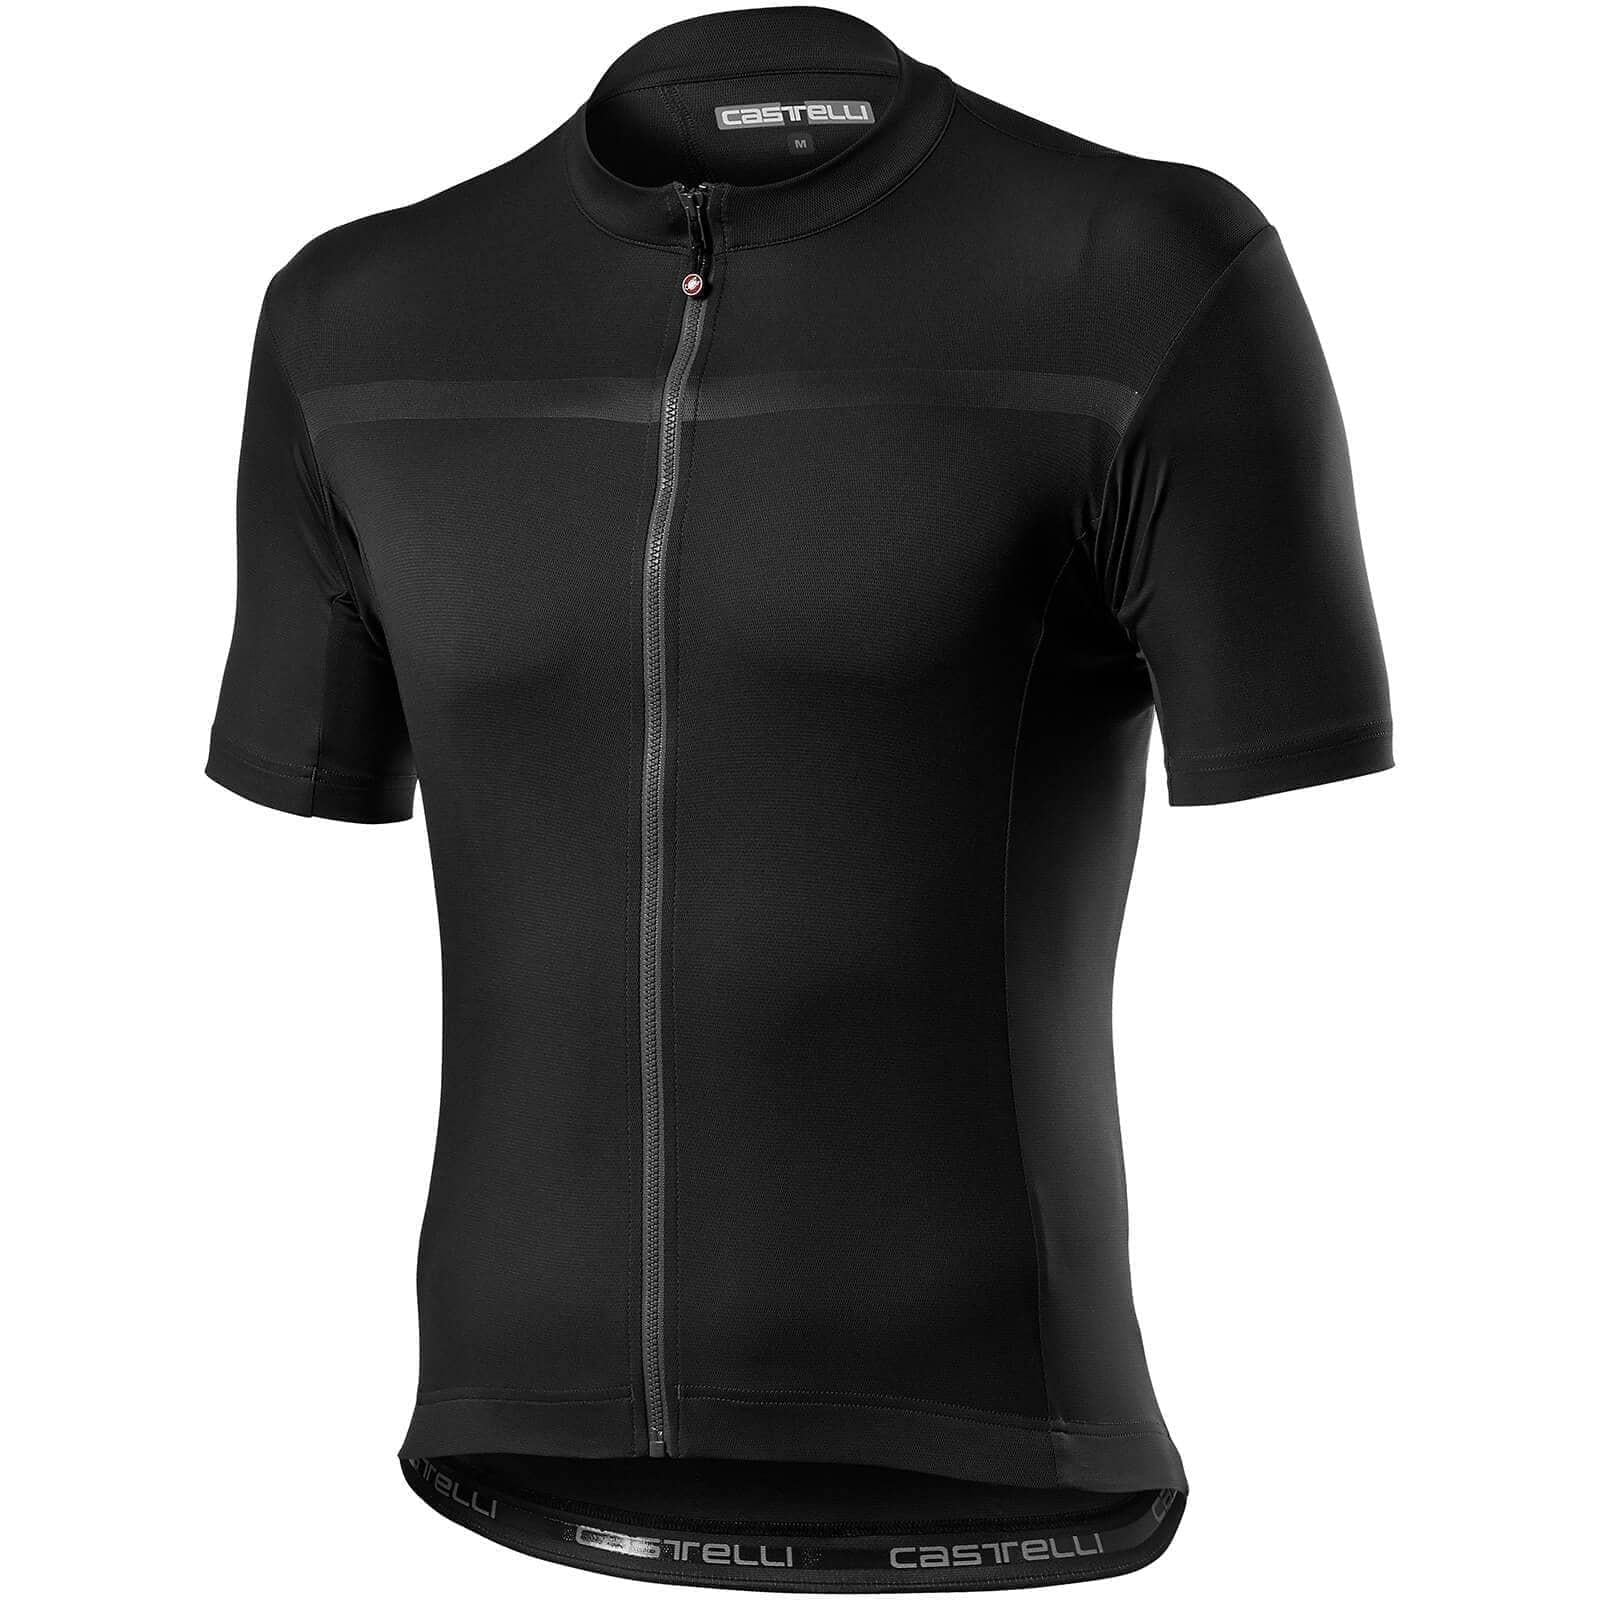 Castelli Classifica Jersey Light Black / S Apparel - Clothing - Men's Jerseys - Road